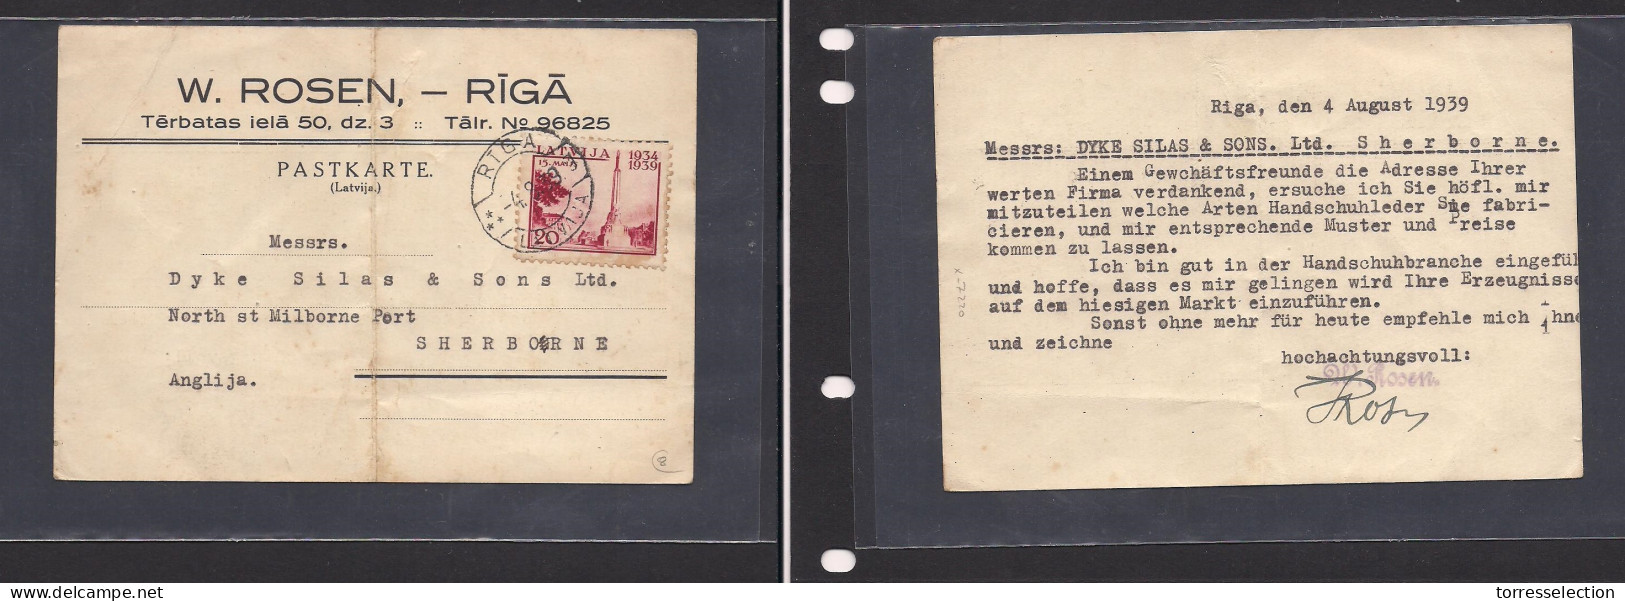 LATVIA. Latvia Cover 1939 Riga To Sherbone Fkd Priv Card. Easy Deal. XSALE. - Letonia